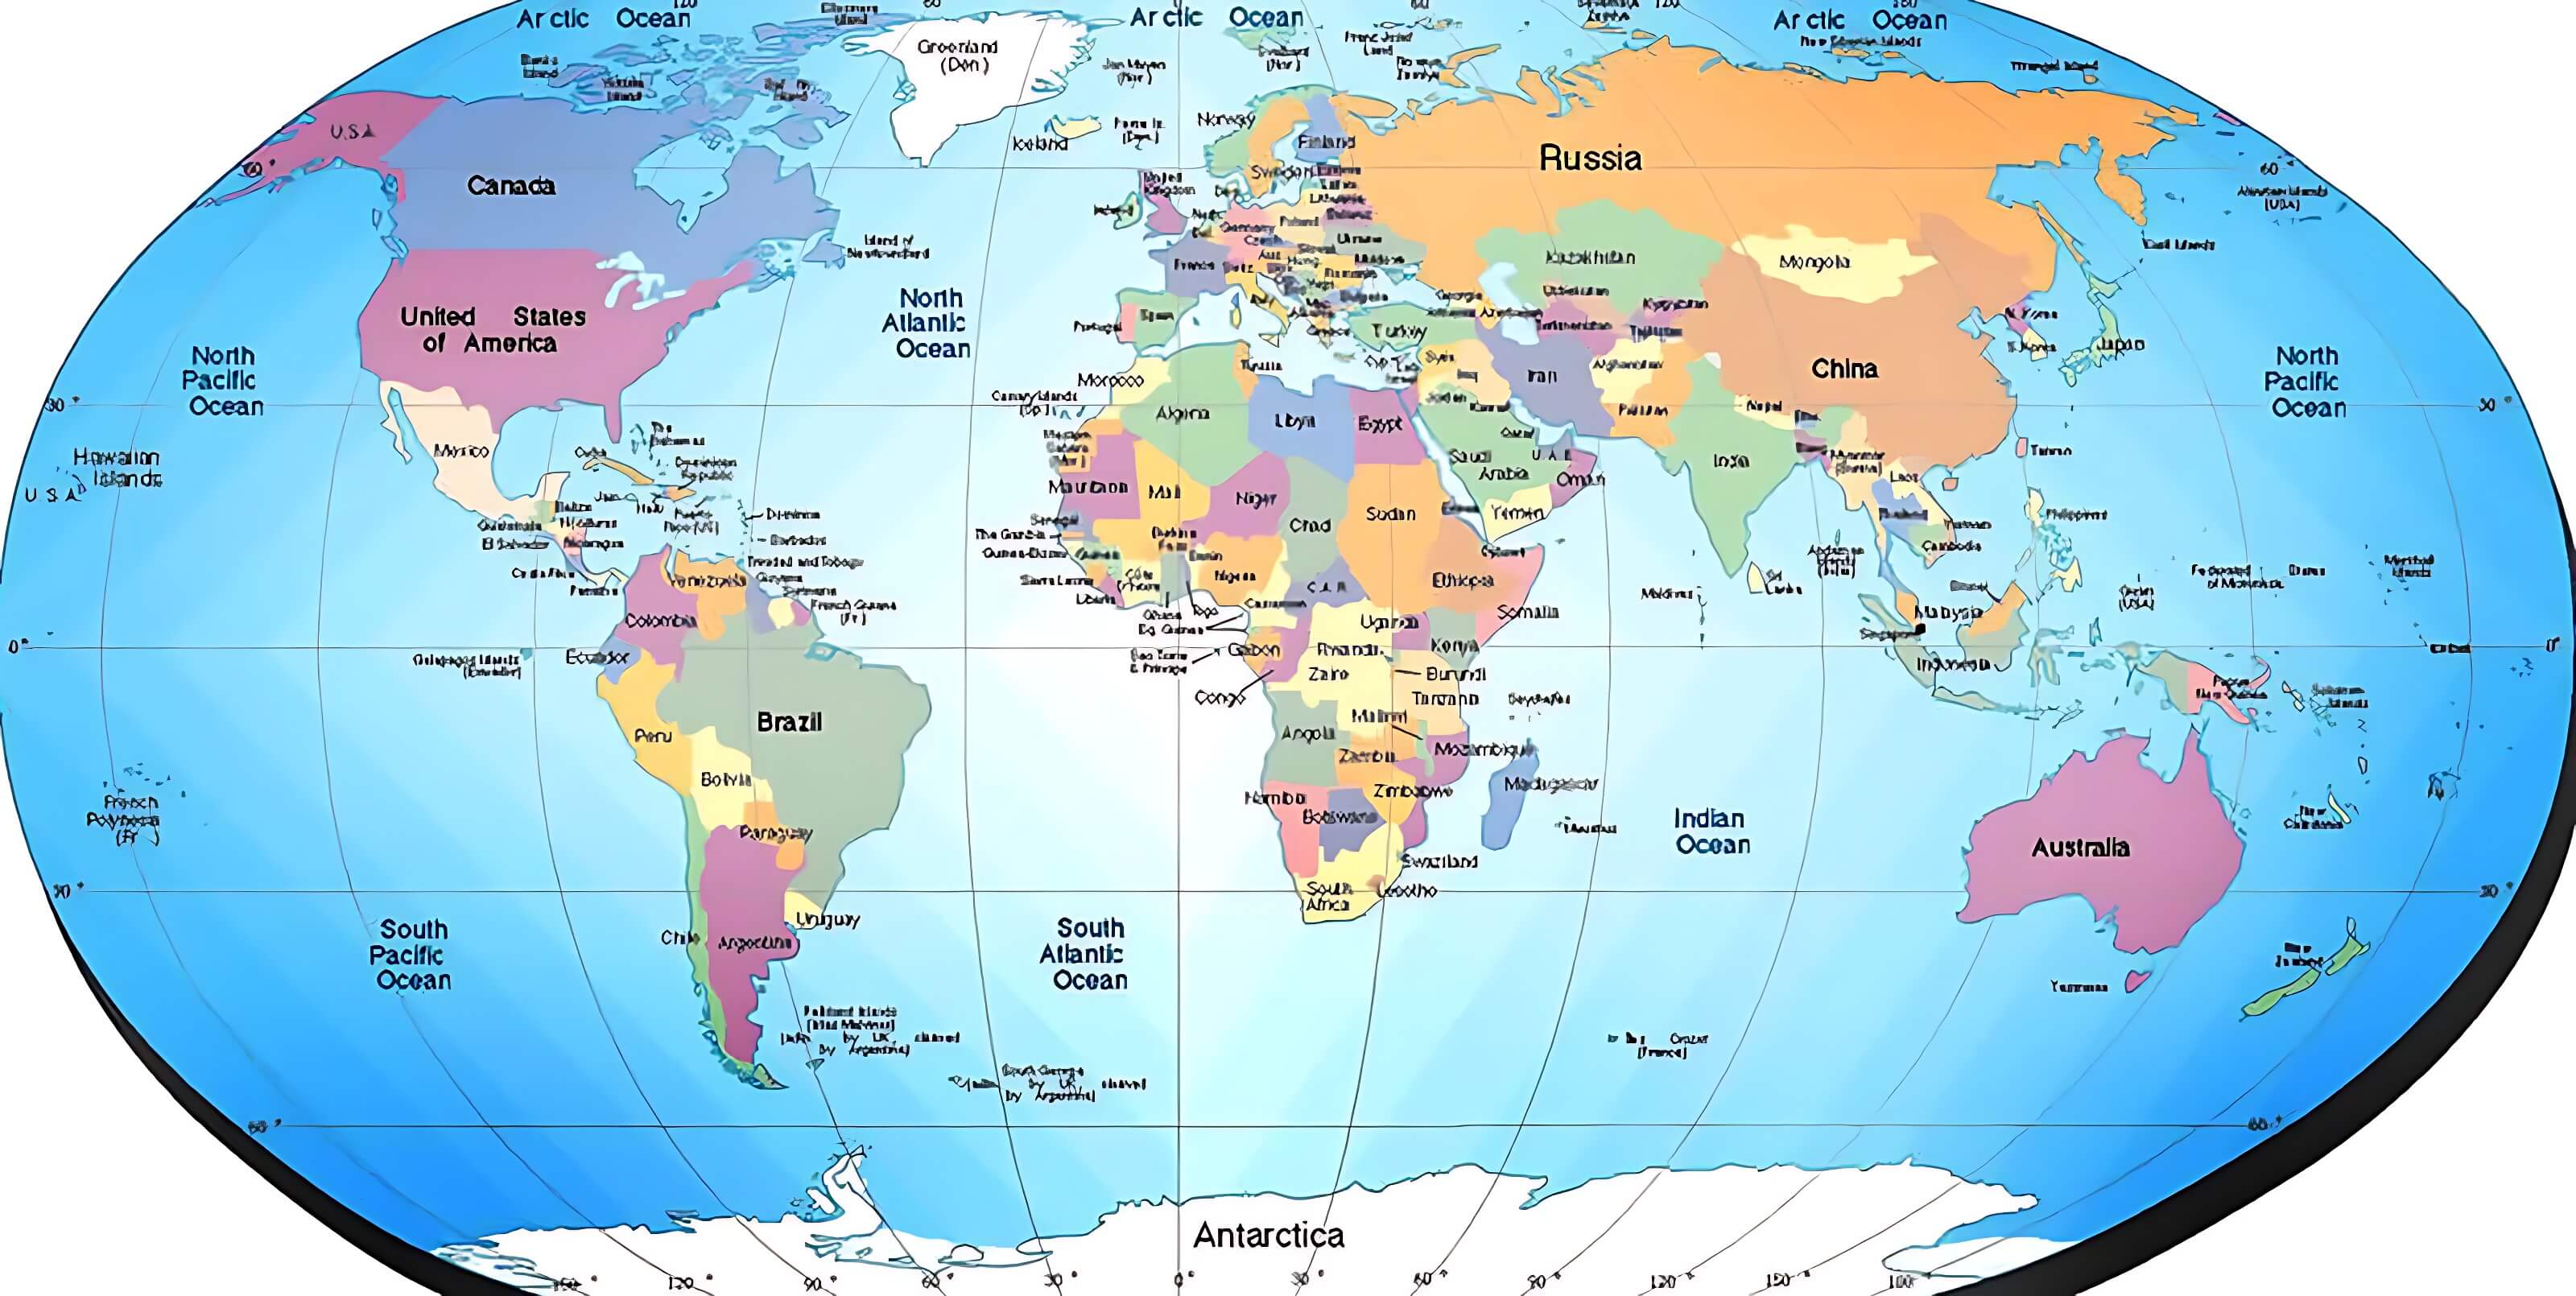 Map of World - World Map